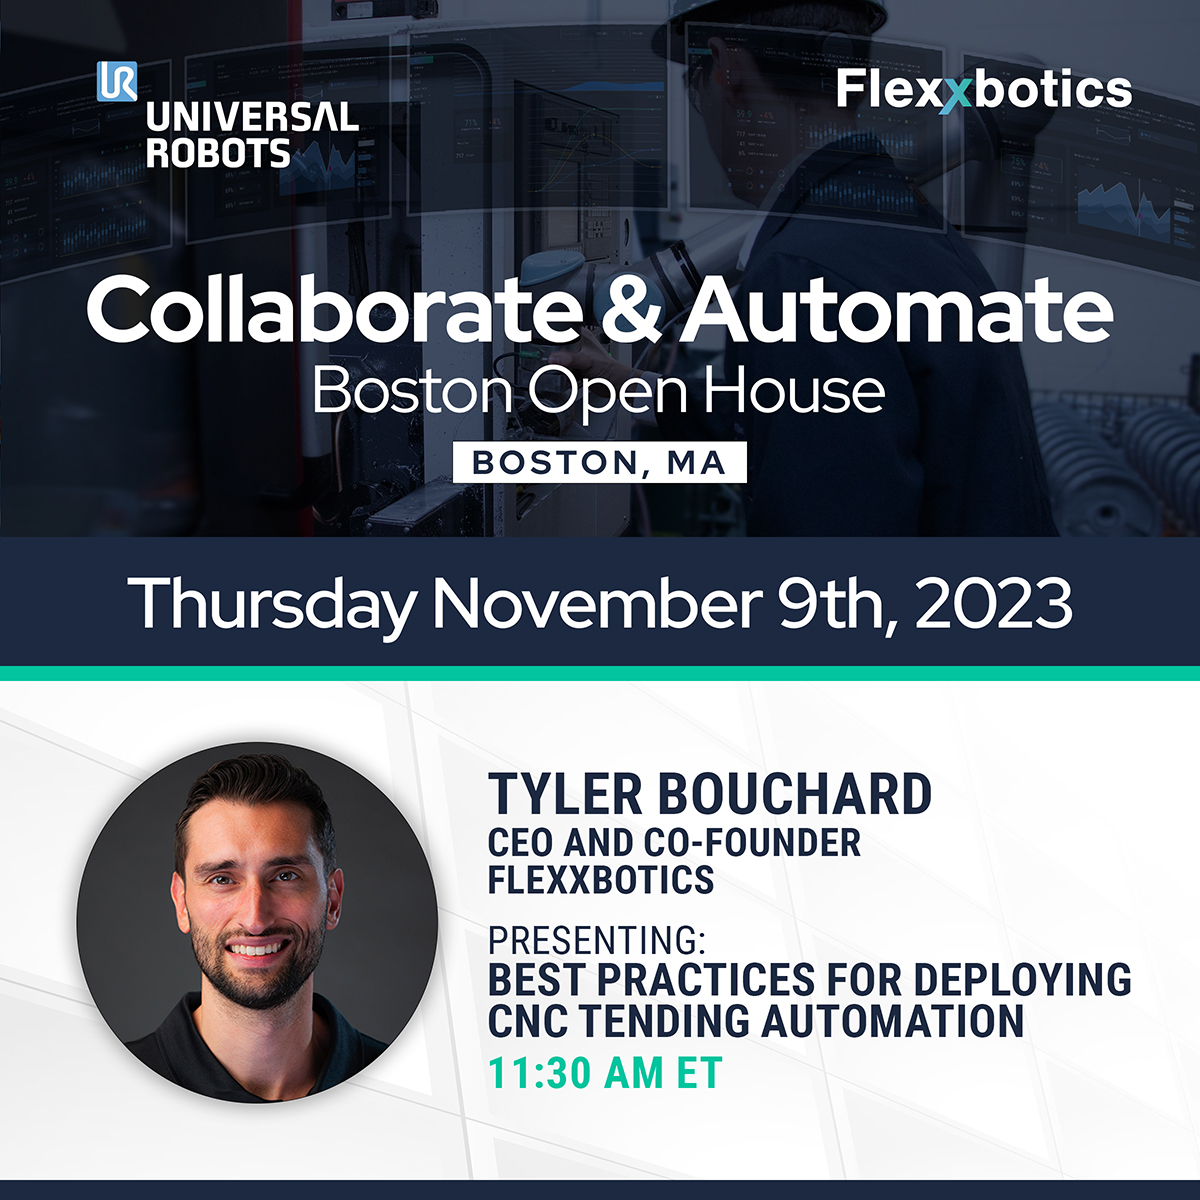 Flexxbotics - UR - Collaborate & Automate